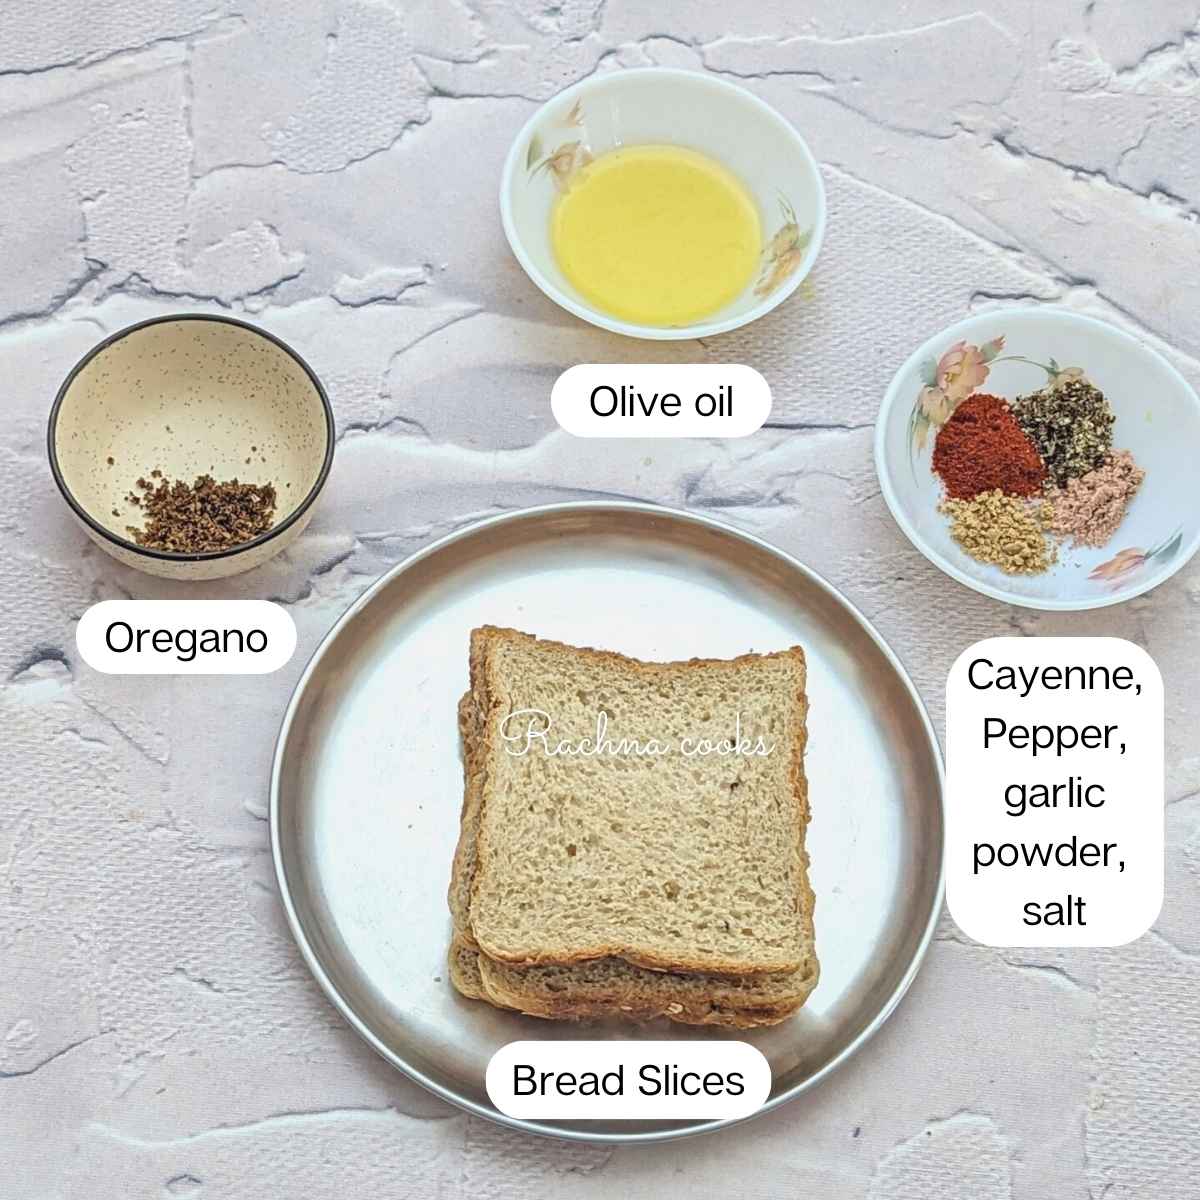 Ingredients for making air fryer croutons: bread slices, seasonings and olive oil